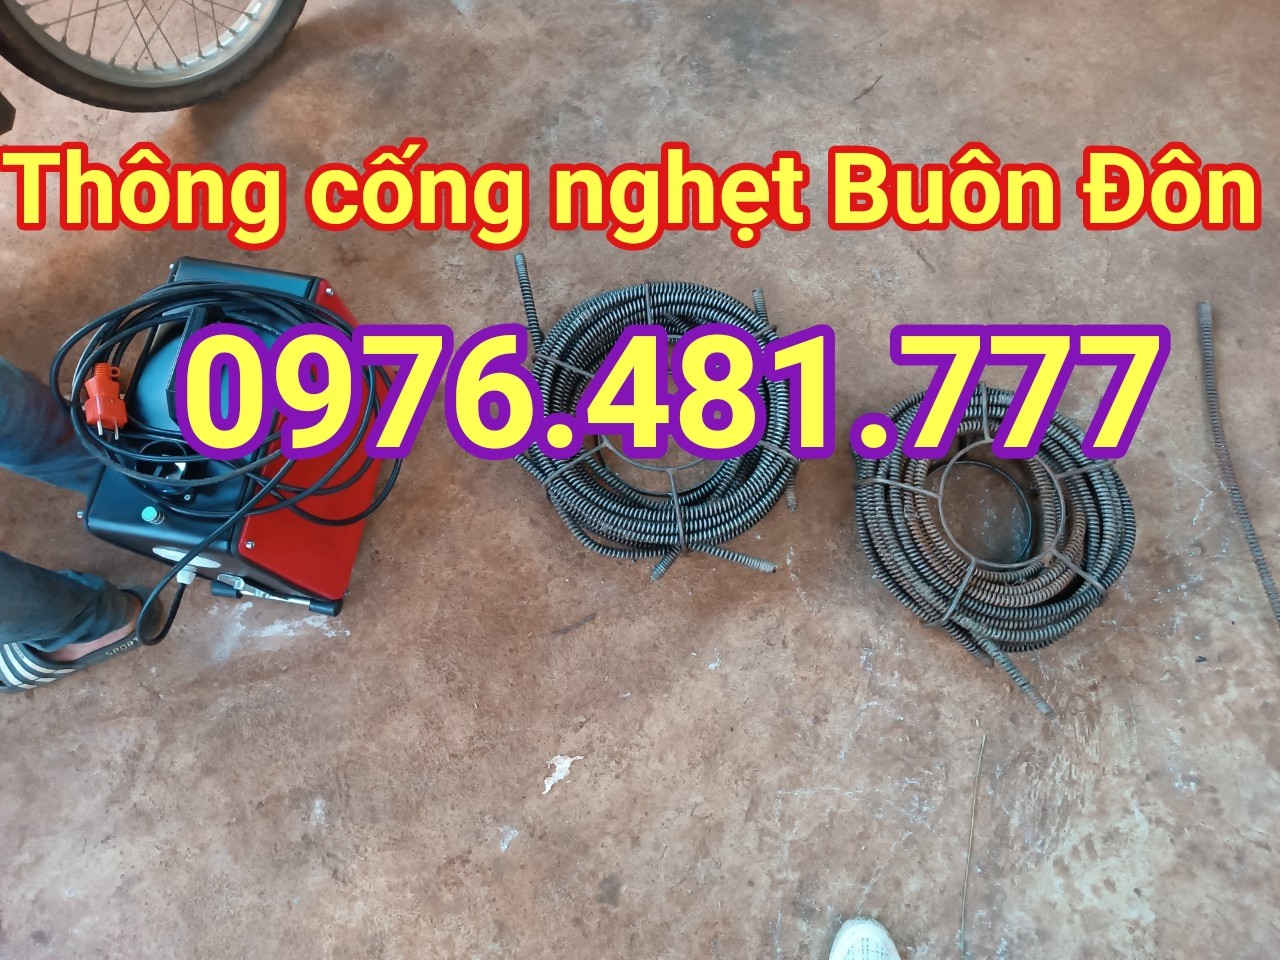 thong-cong-nghet-buon-don